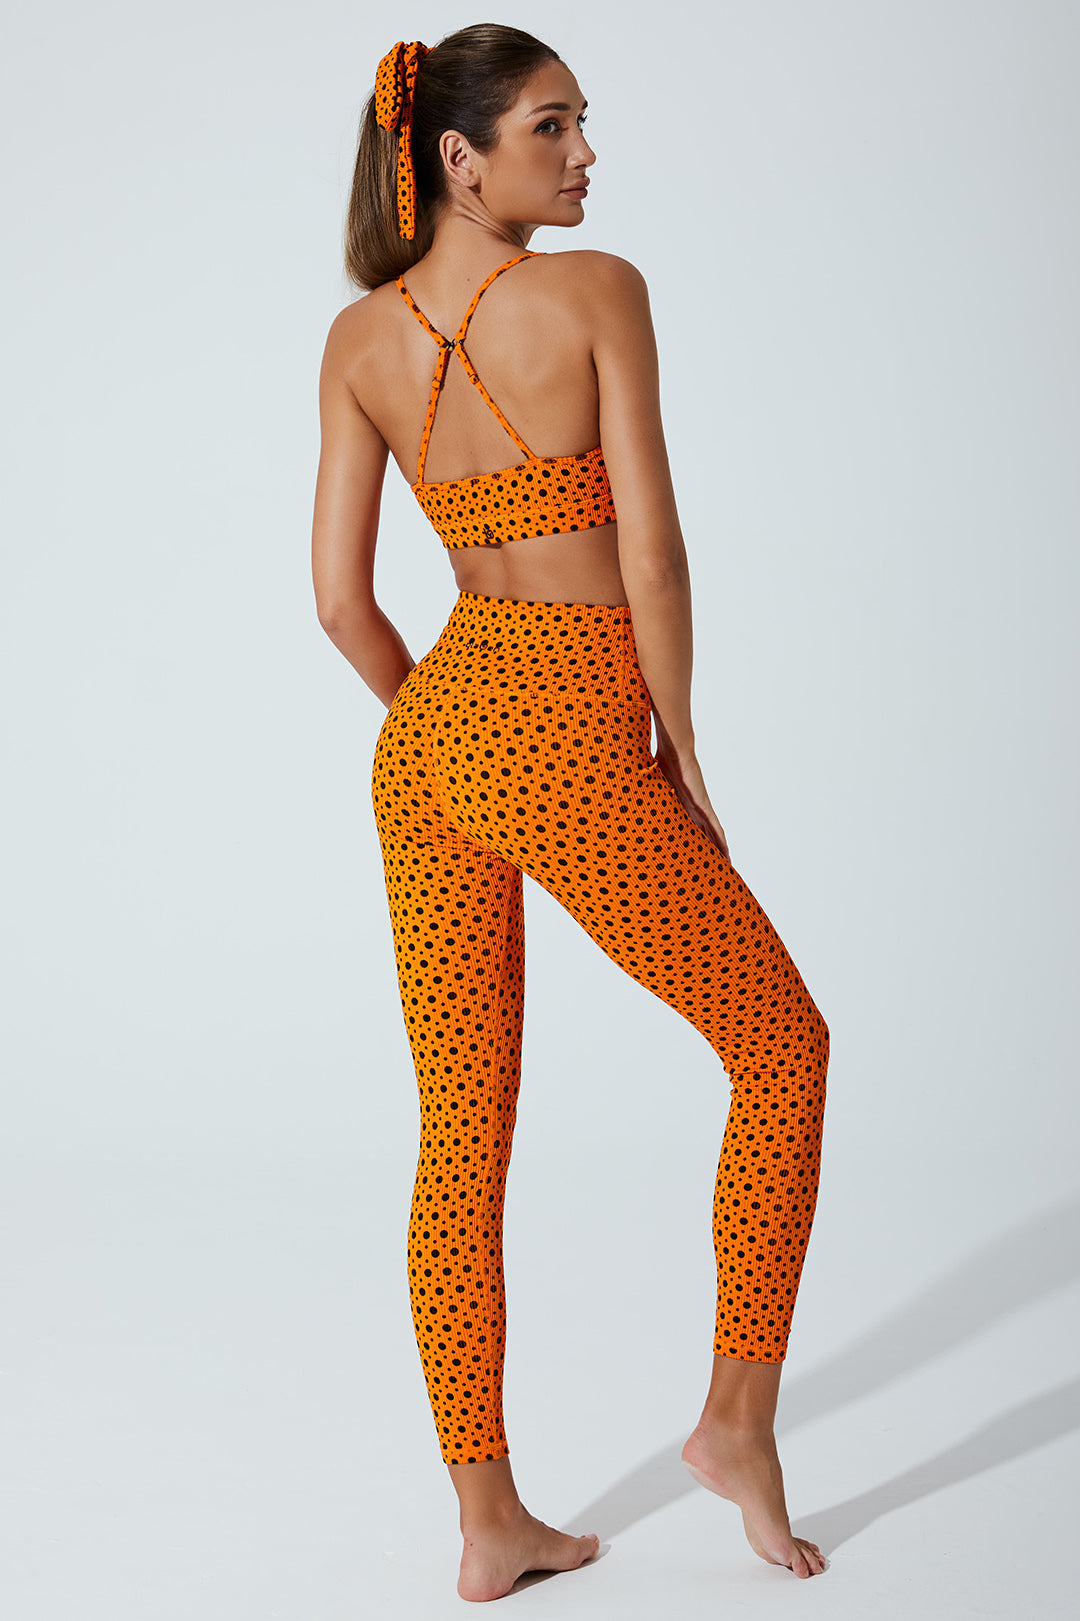 Vibrant orange polka dot leggings for women with a playful beetle design - OW-0023-WLG-OR.